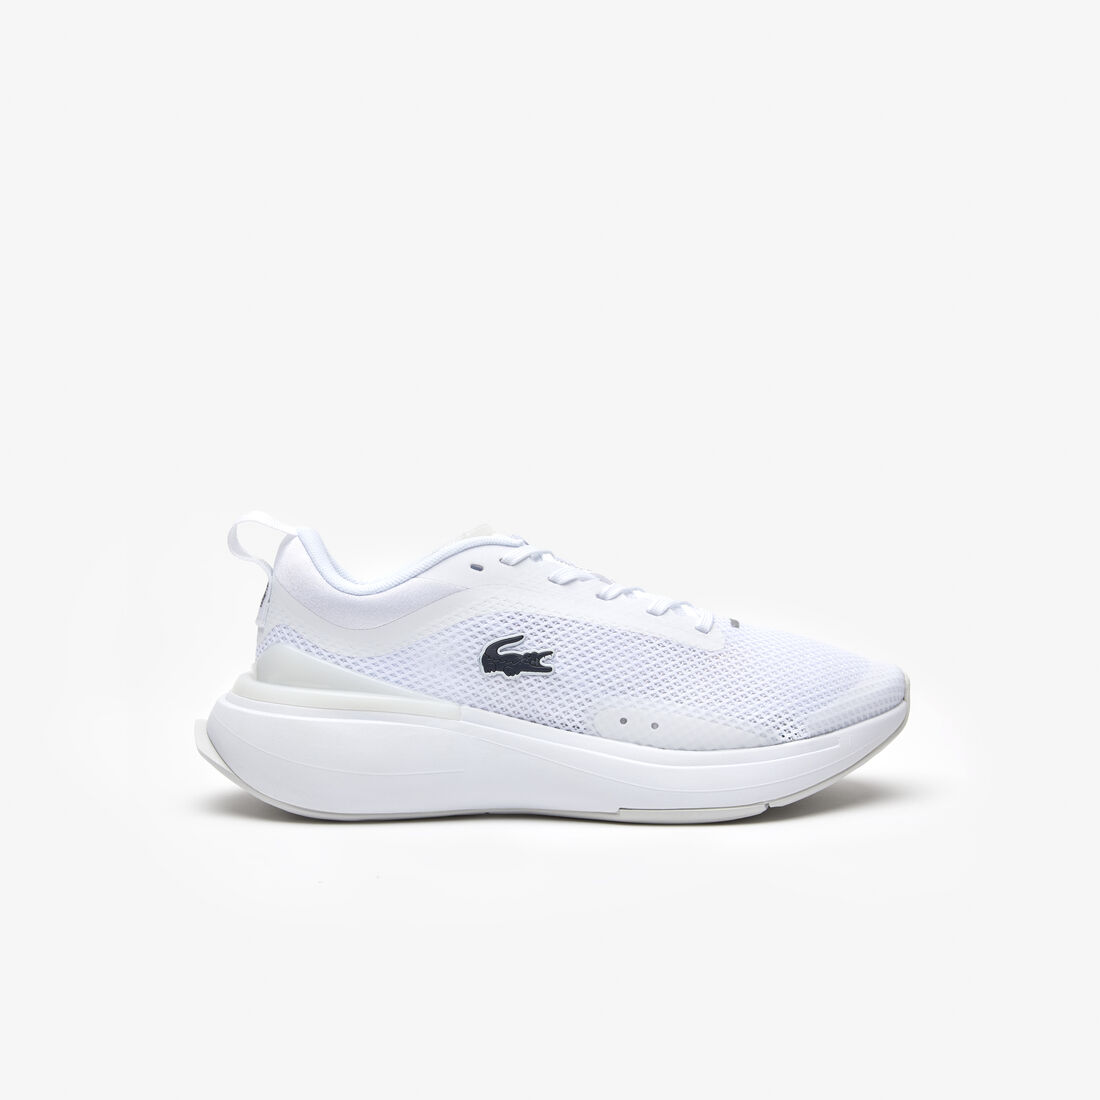 Lacoste Run Spin Evolution Textil Sneakers Damen Weiß | CTFV-35061